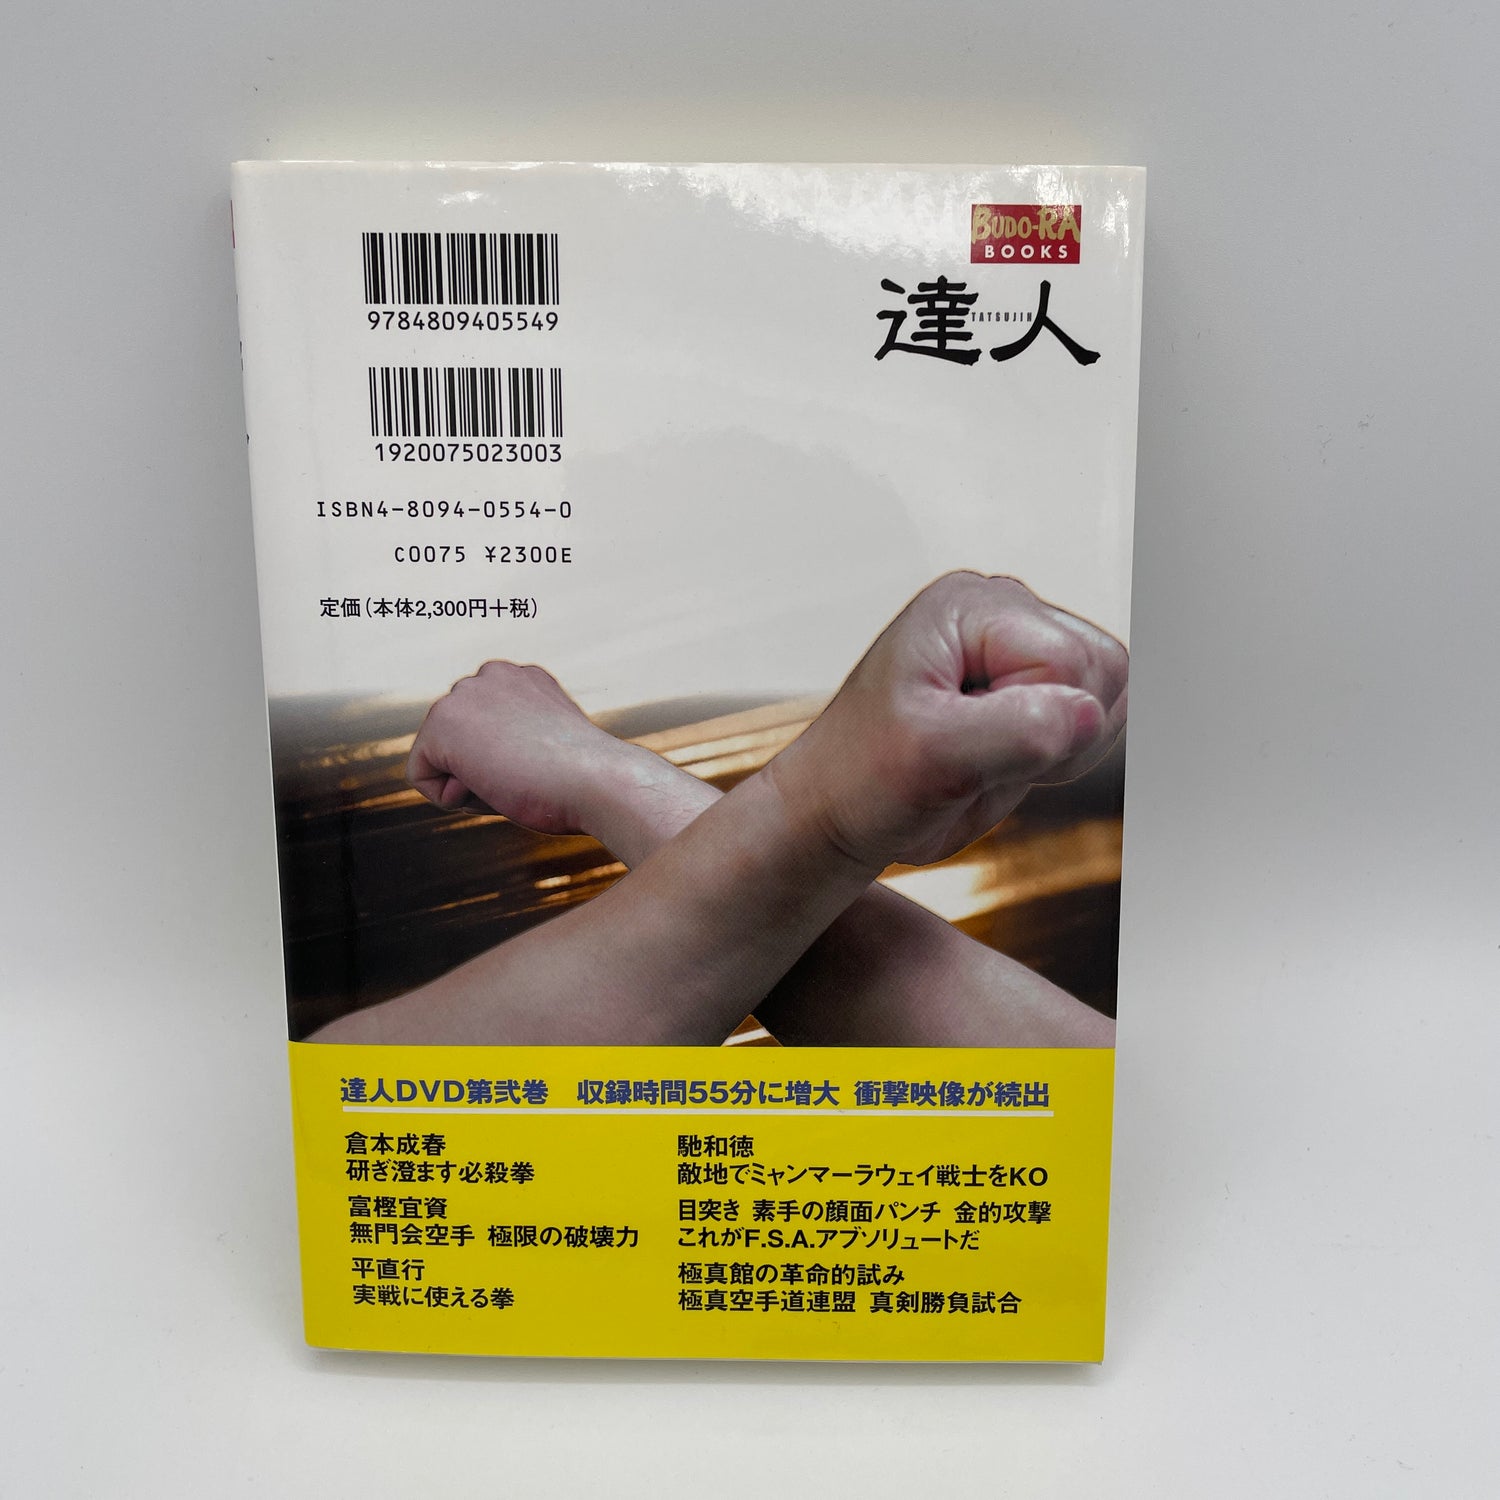 Tatsujin Vol 2: Strongest Legends of Karate Book & DVD (Preowned)